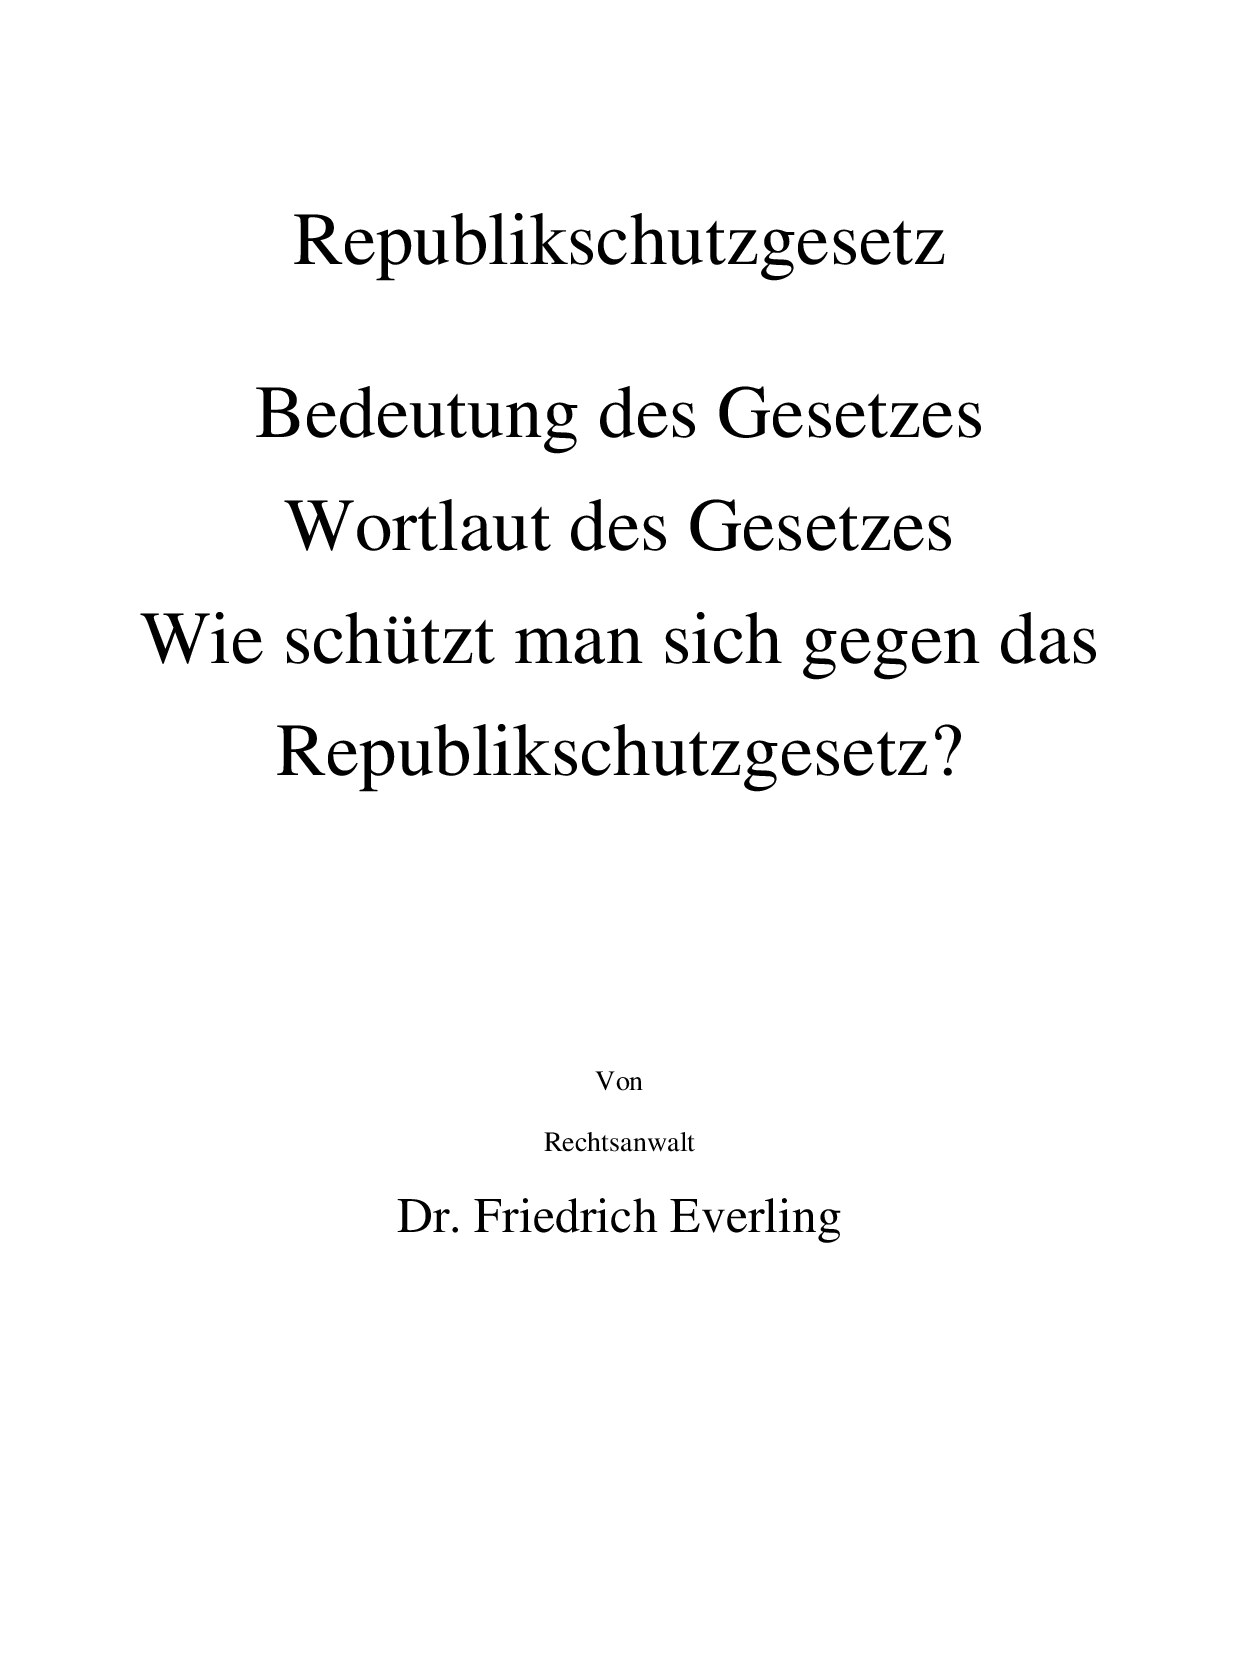 Das Republikschutzgesetz (1930, 33 S., Text)